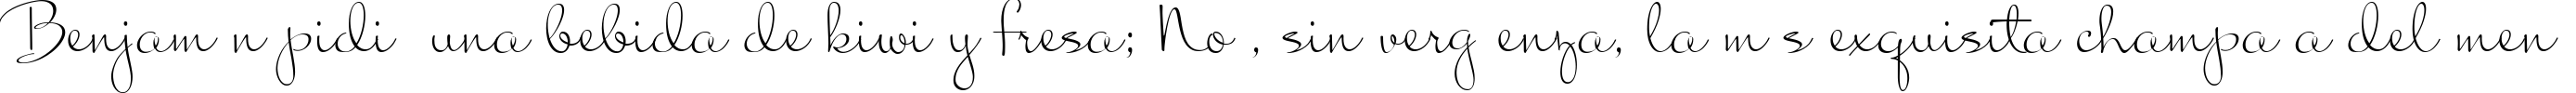 Пример написания шрифтом Inspiration текста на испанском